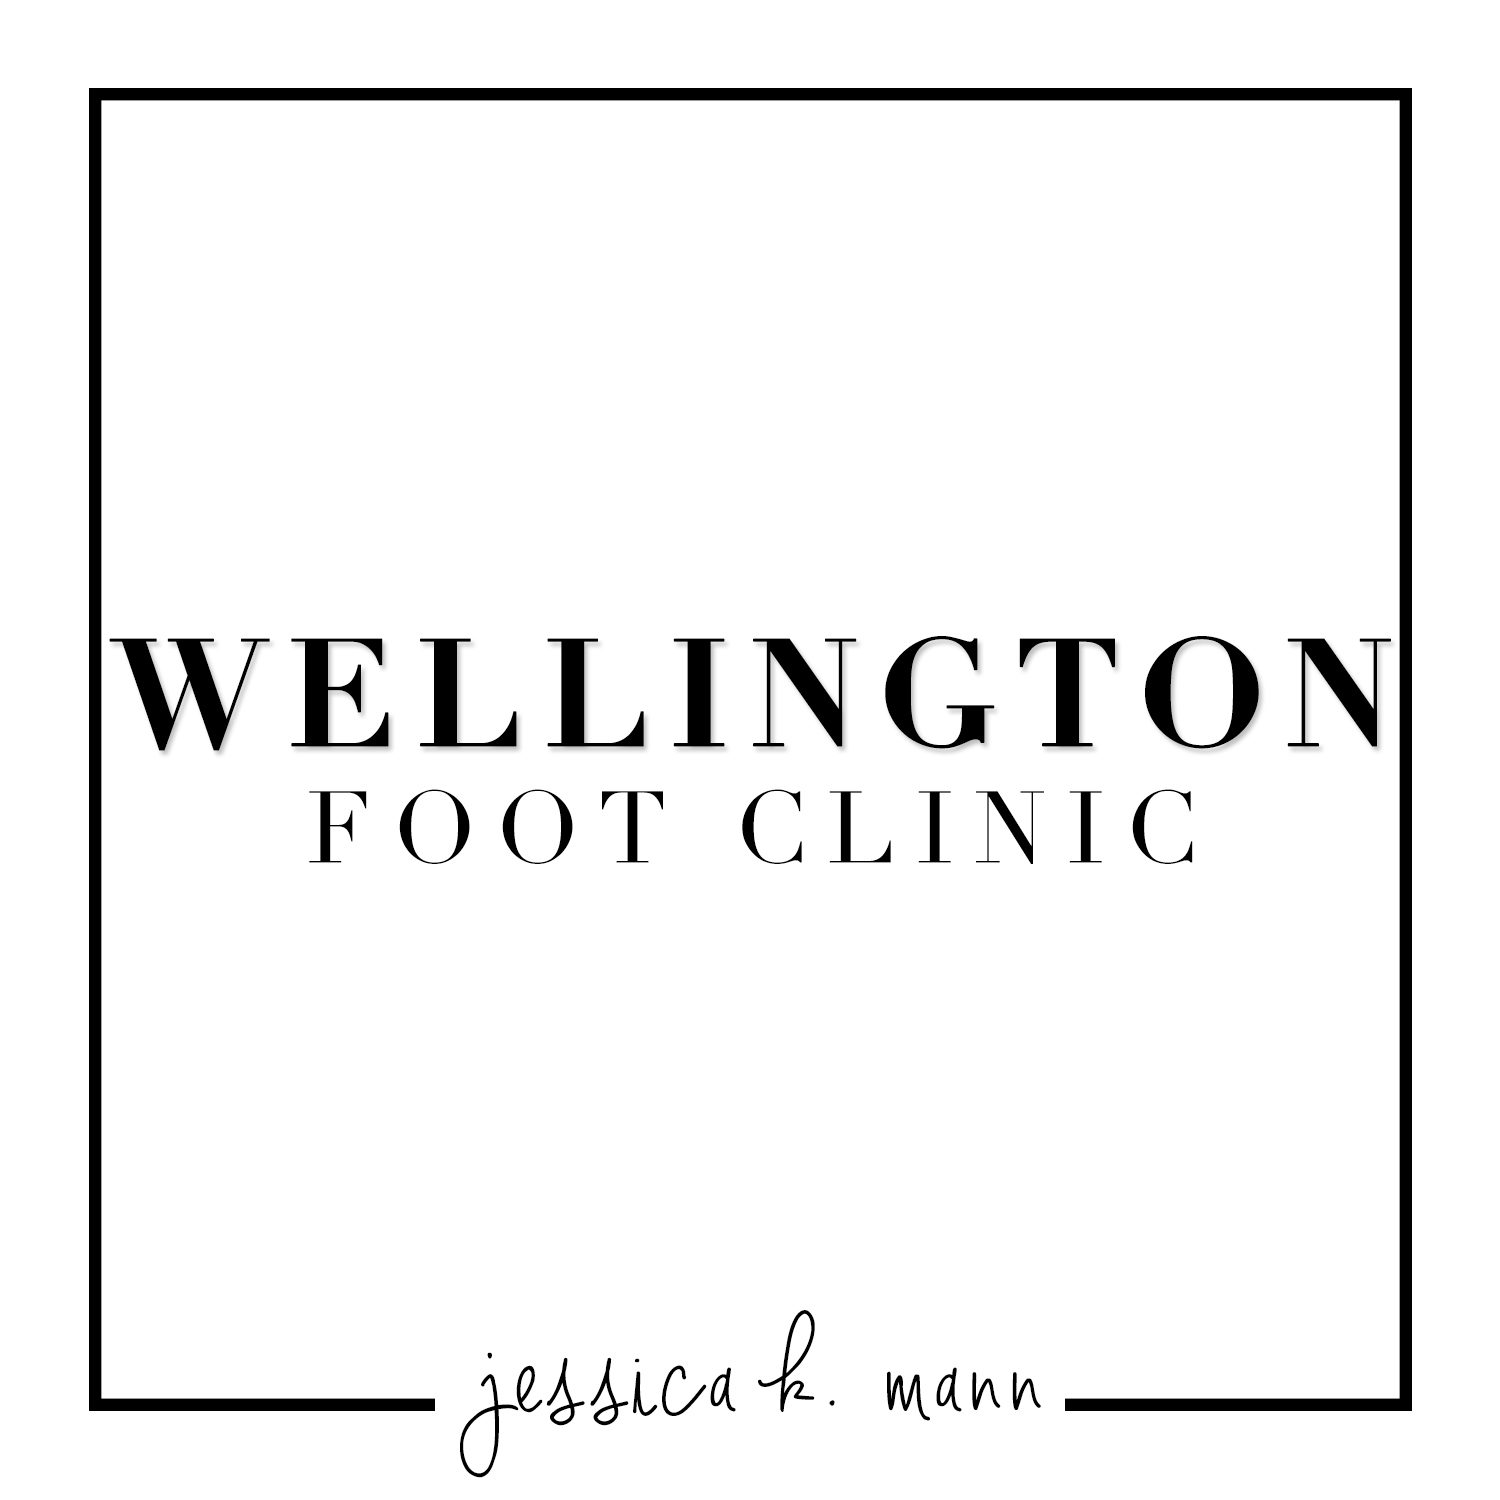 Wellington Foot Clinic